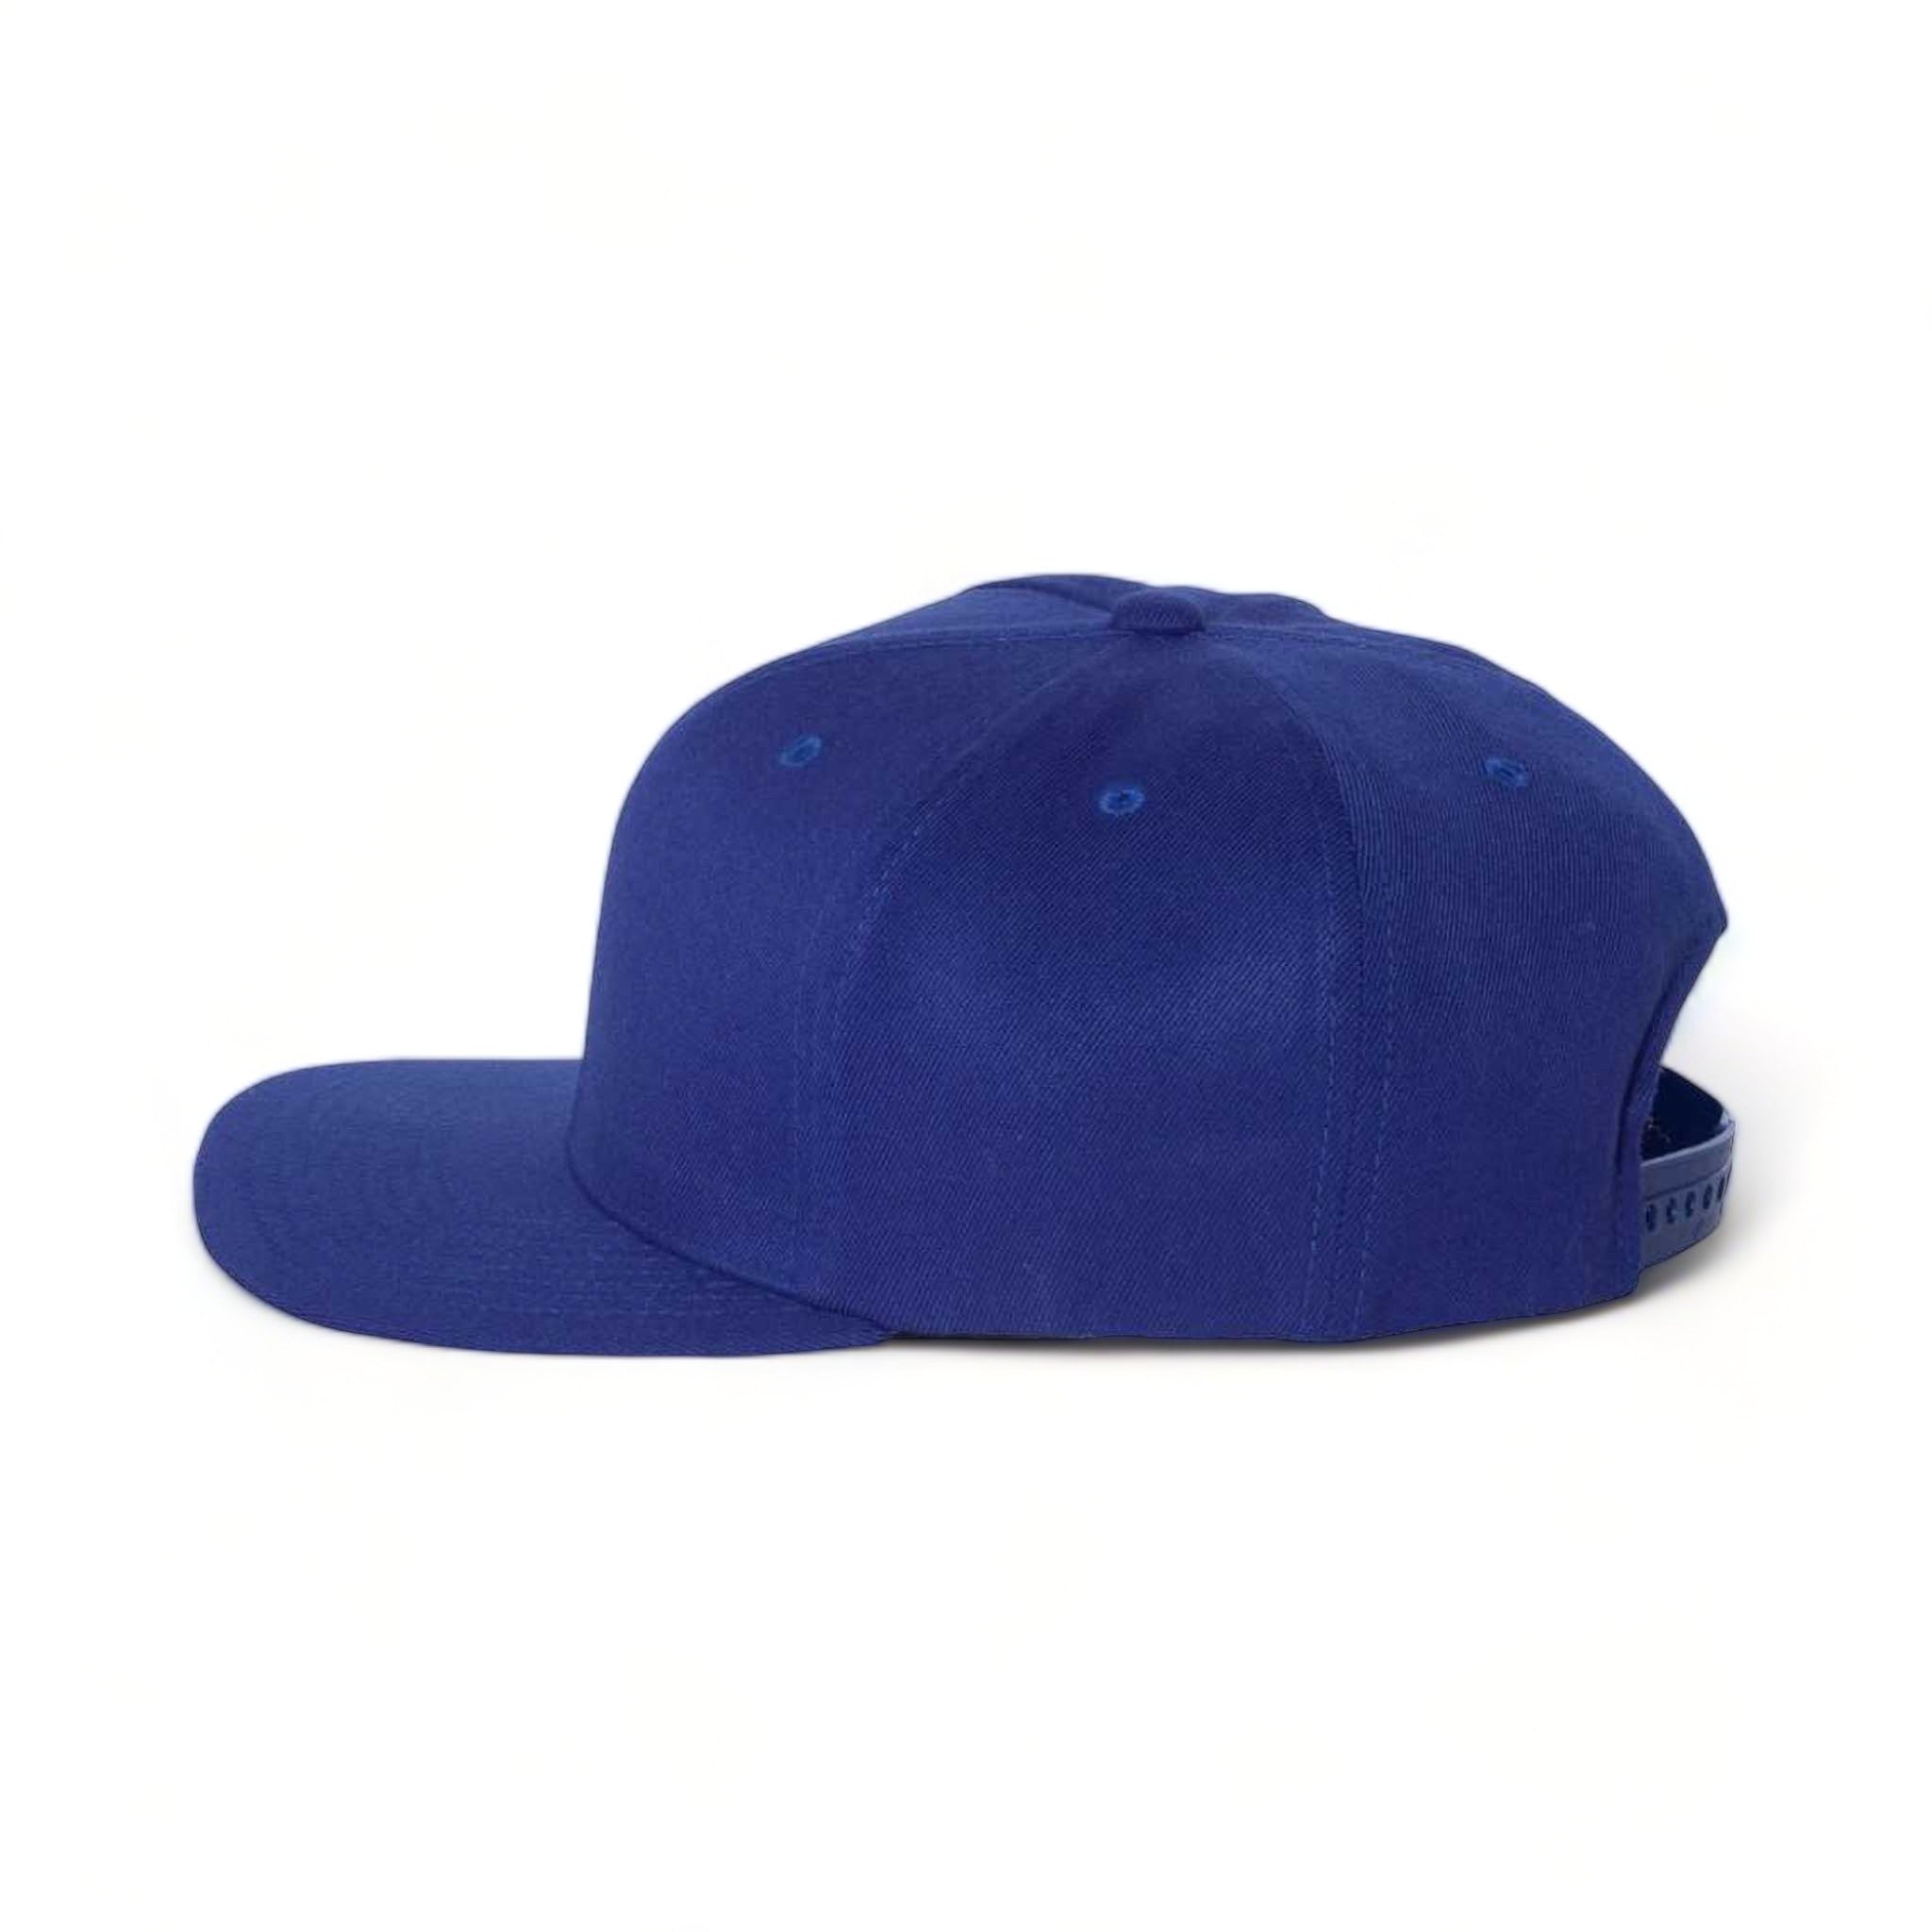 Side view of Flexfit 110F custom hat in royal blue